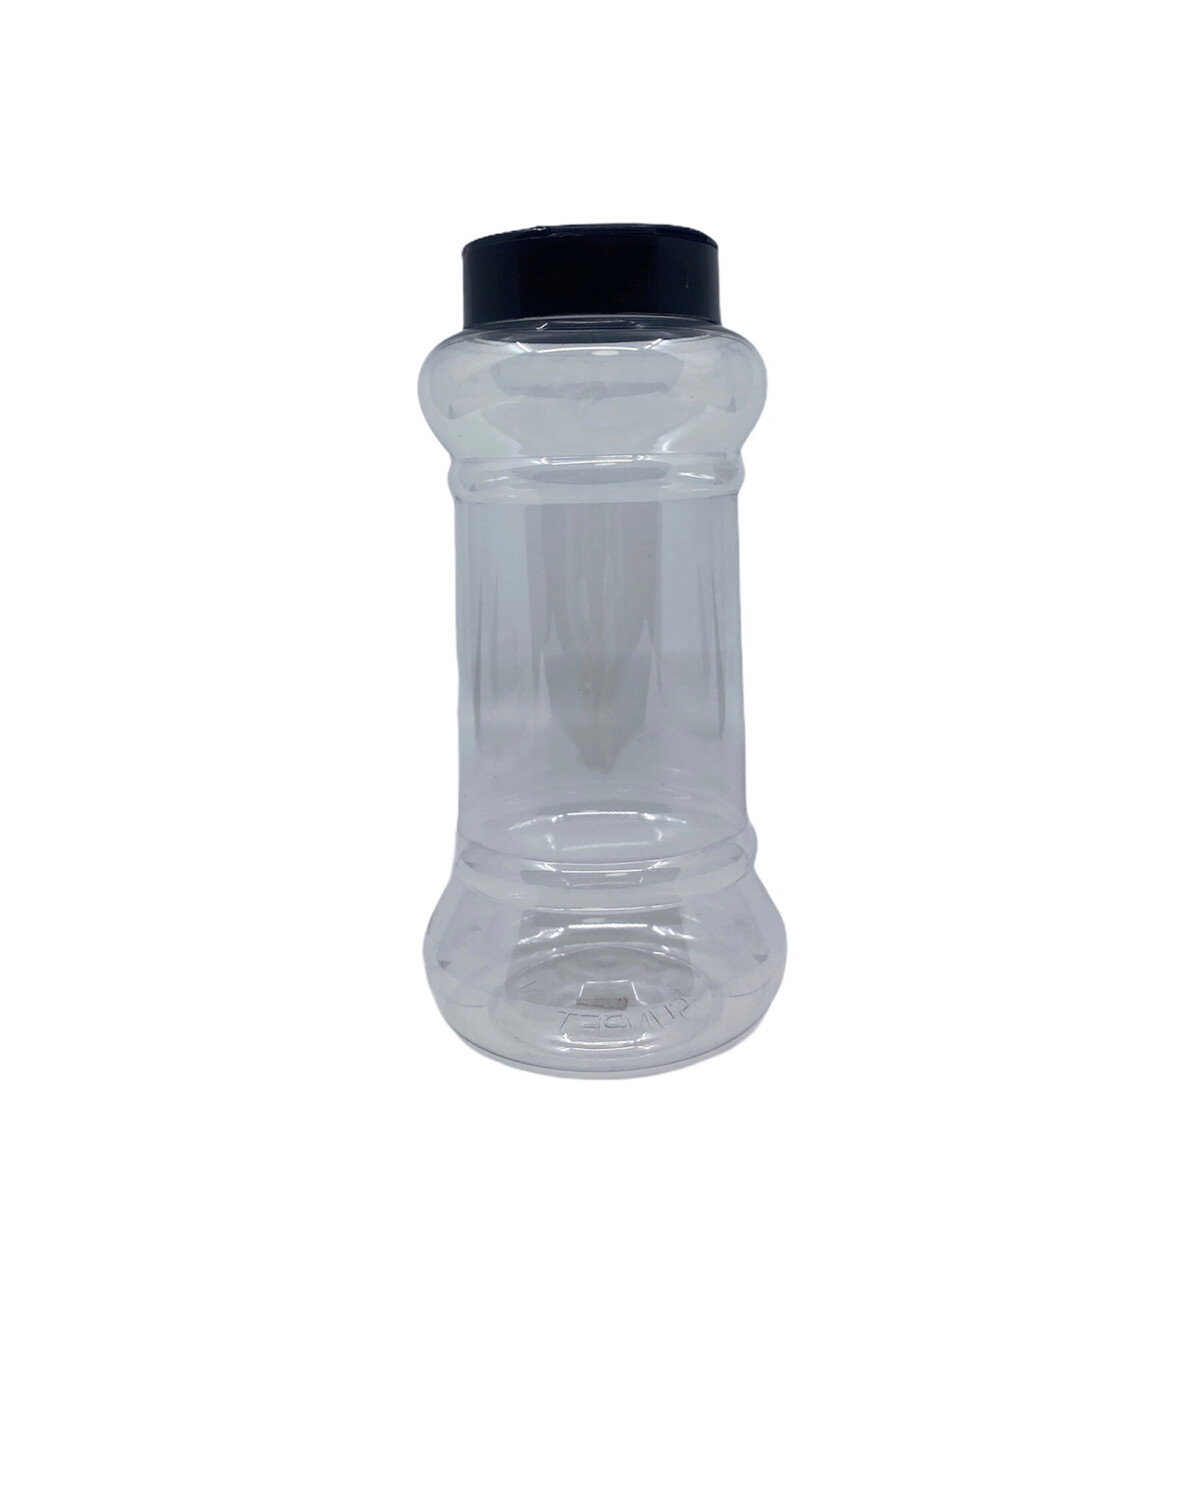 500ml Round PET Plastic Spice Jar - Black